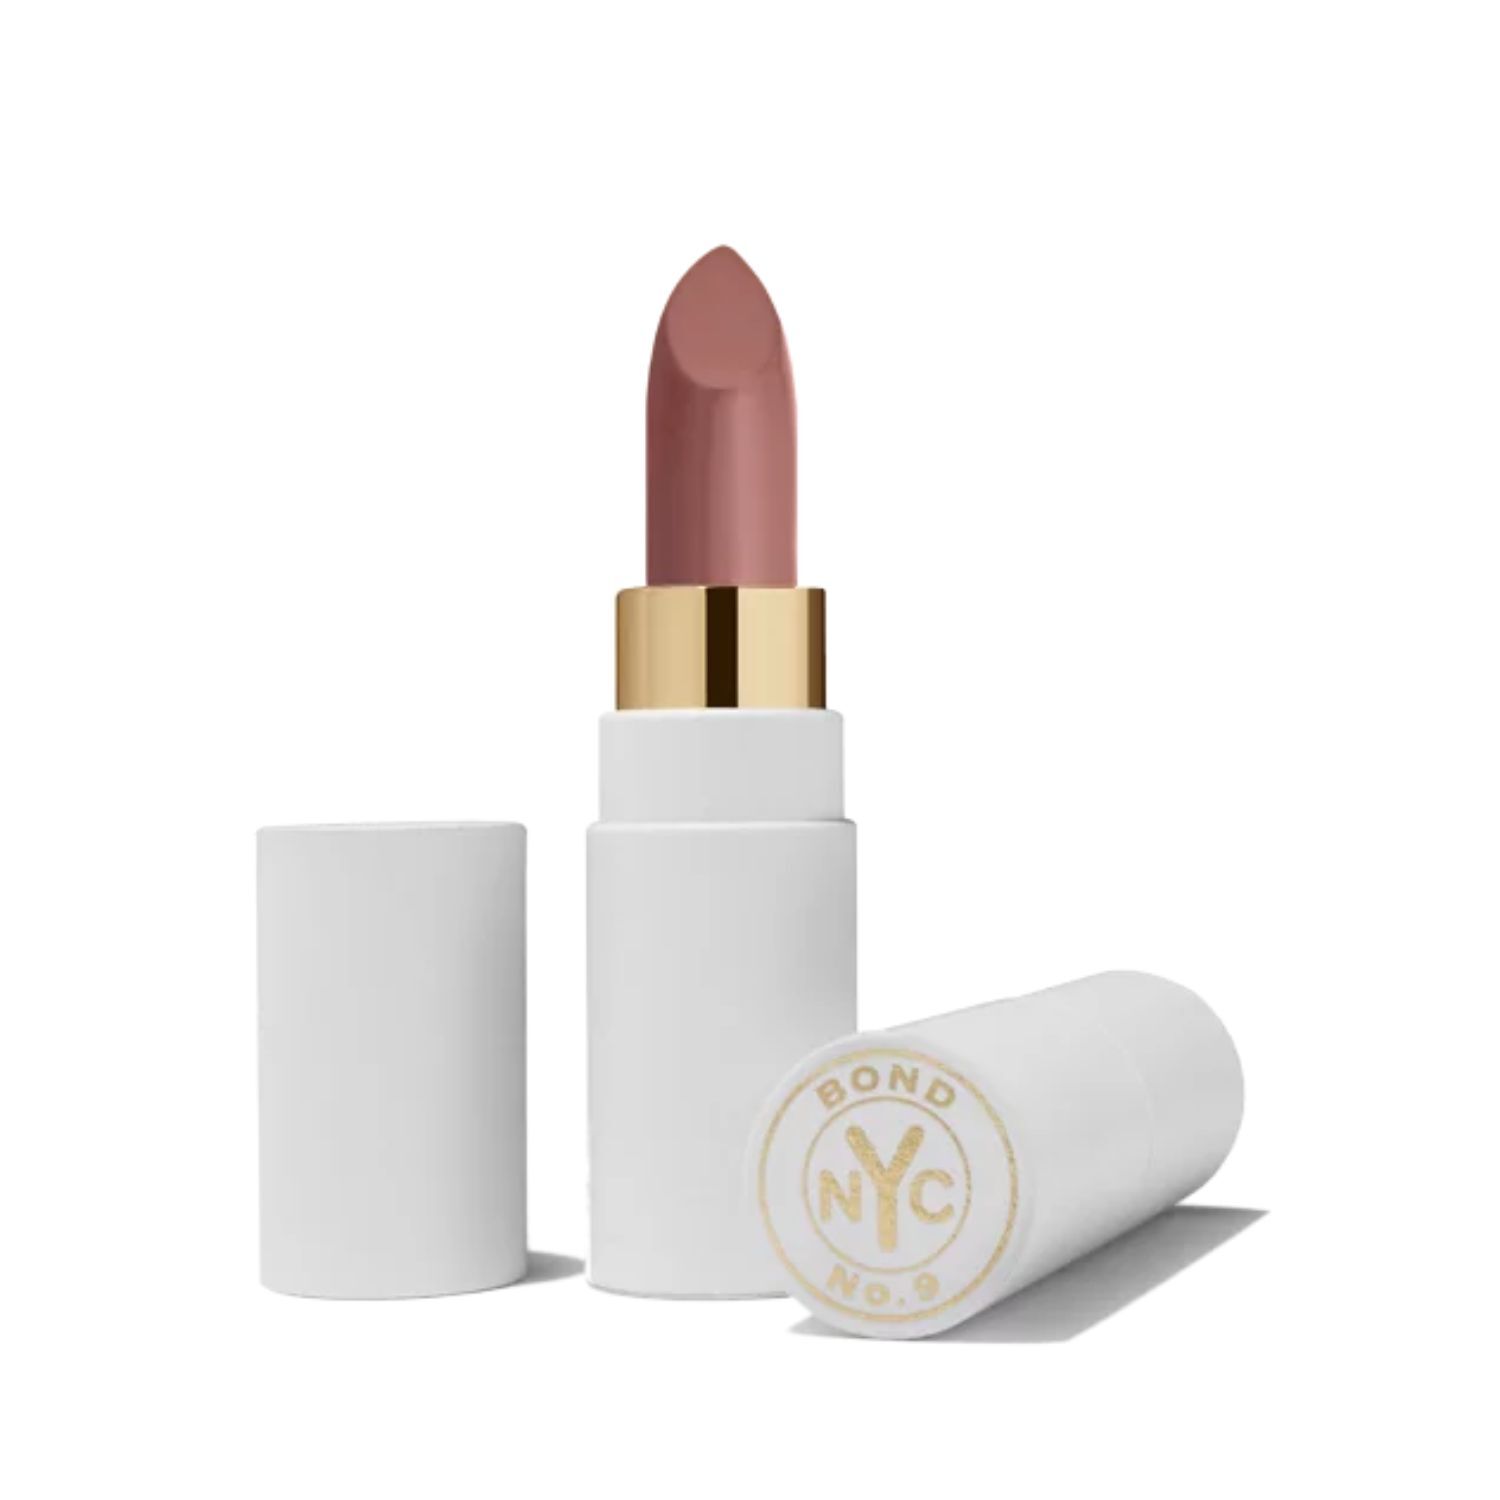 Bond No.9 Madison Square Park Lipstick Refill Unboxed